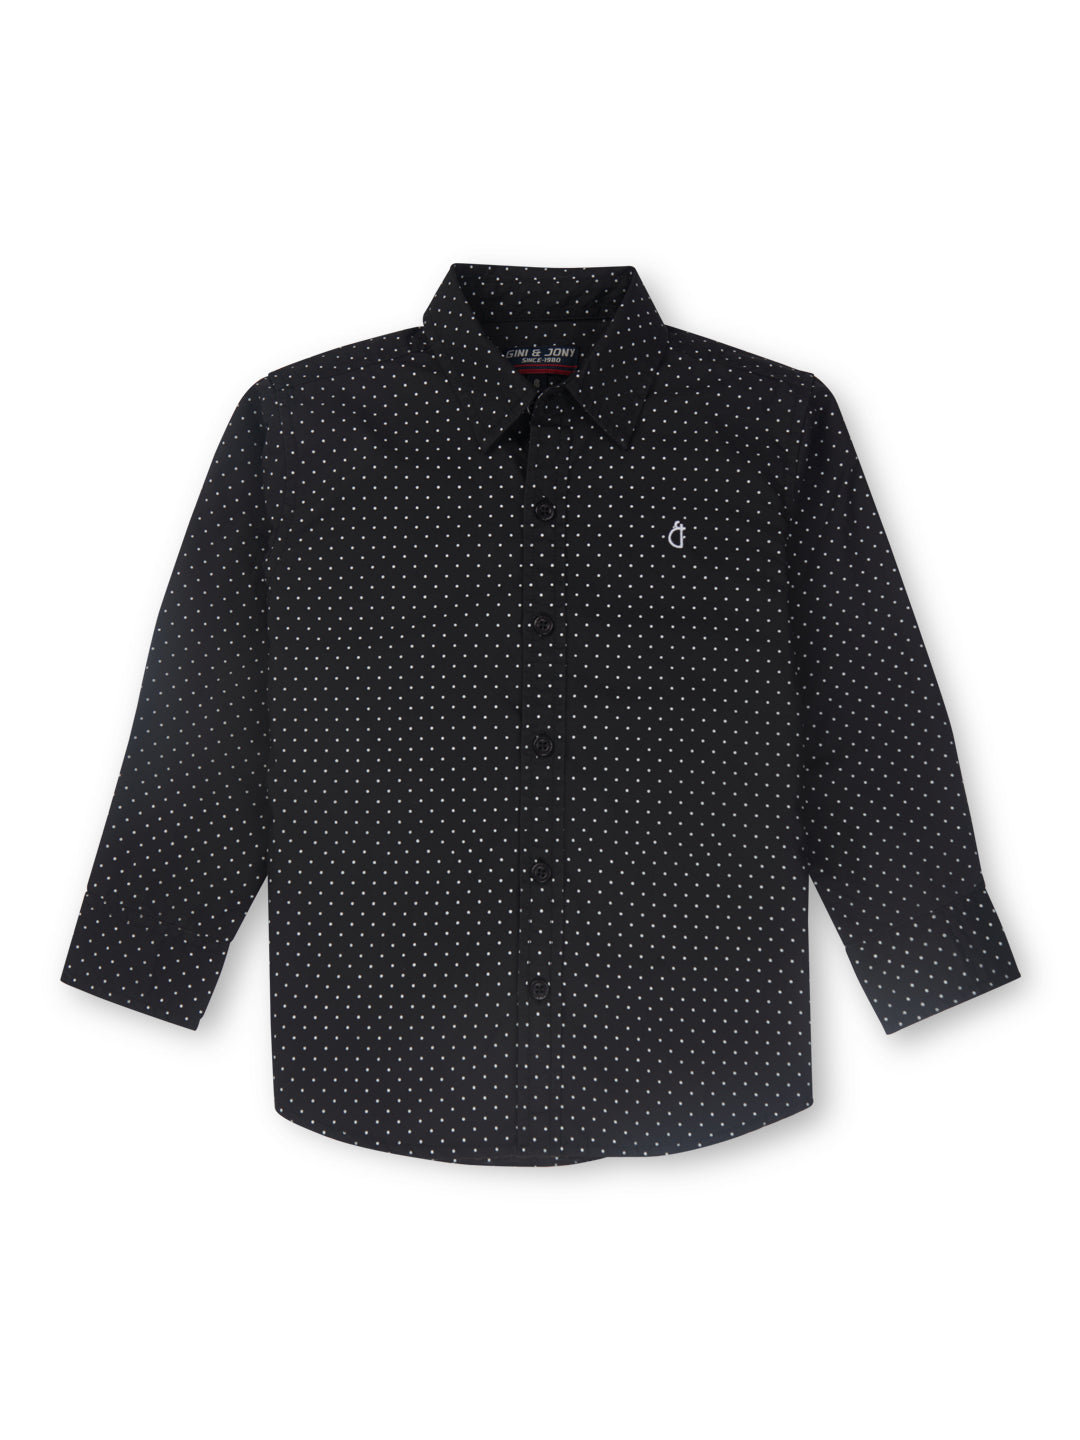 Boys black woven full sleeve polka dot print shirt